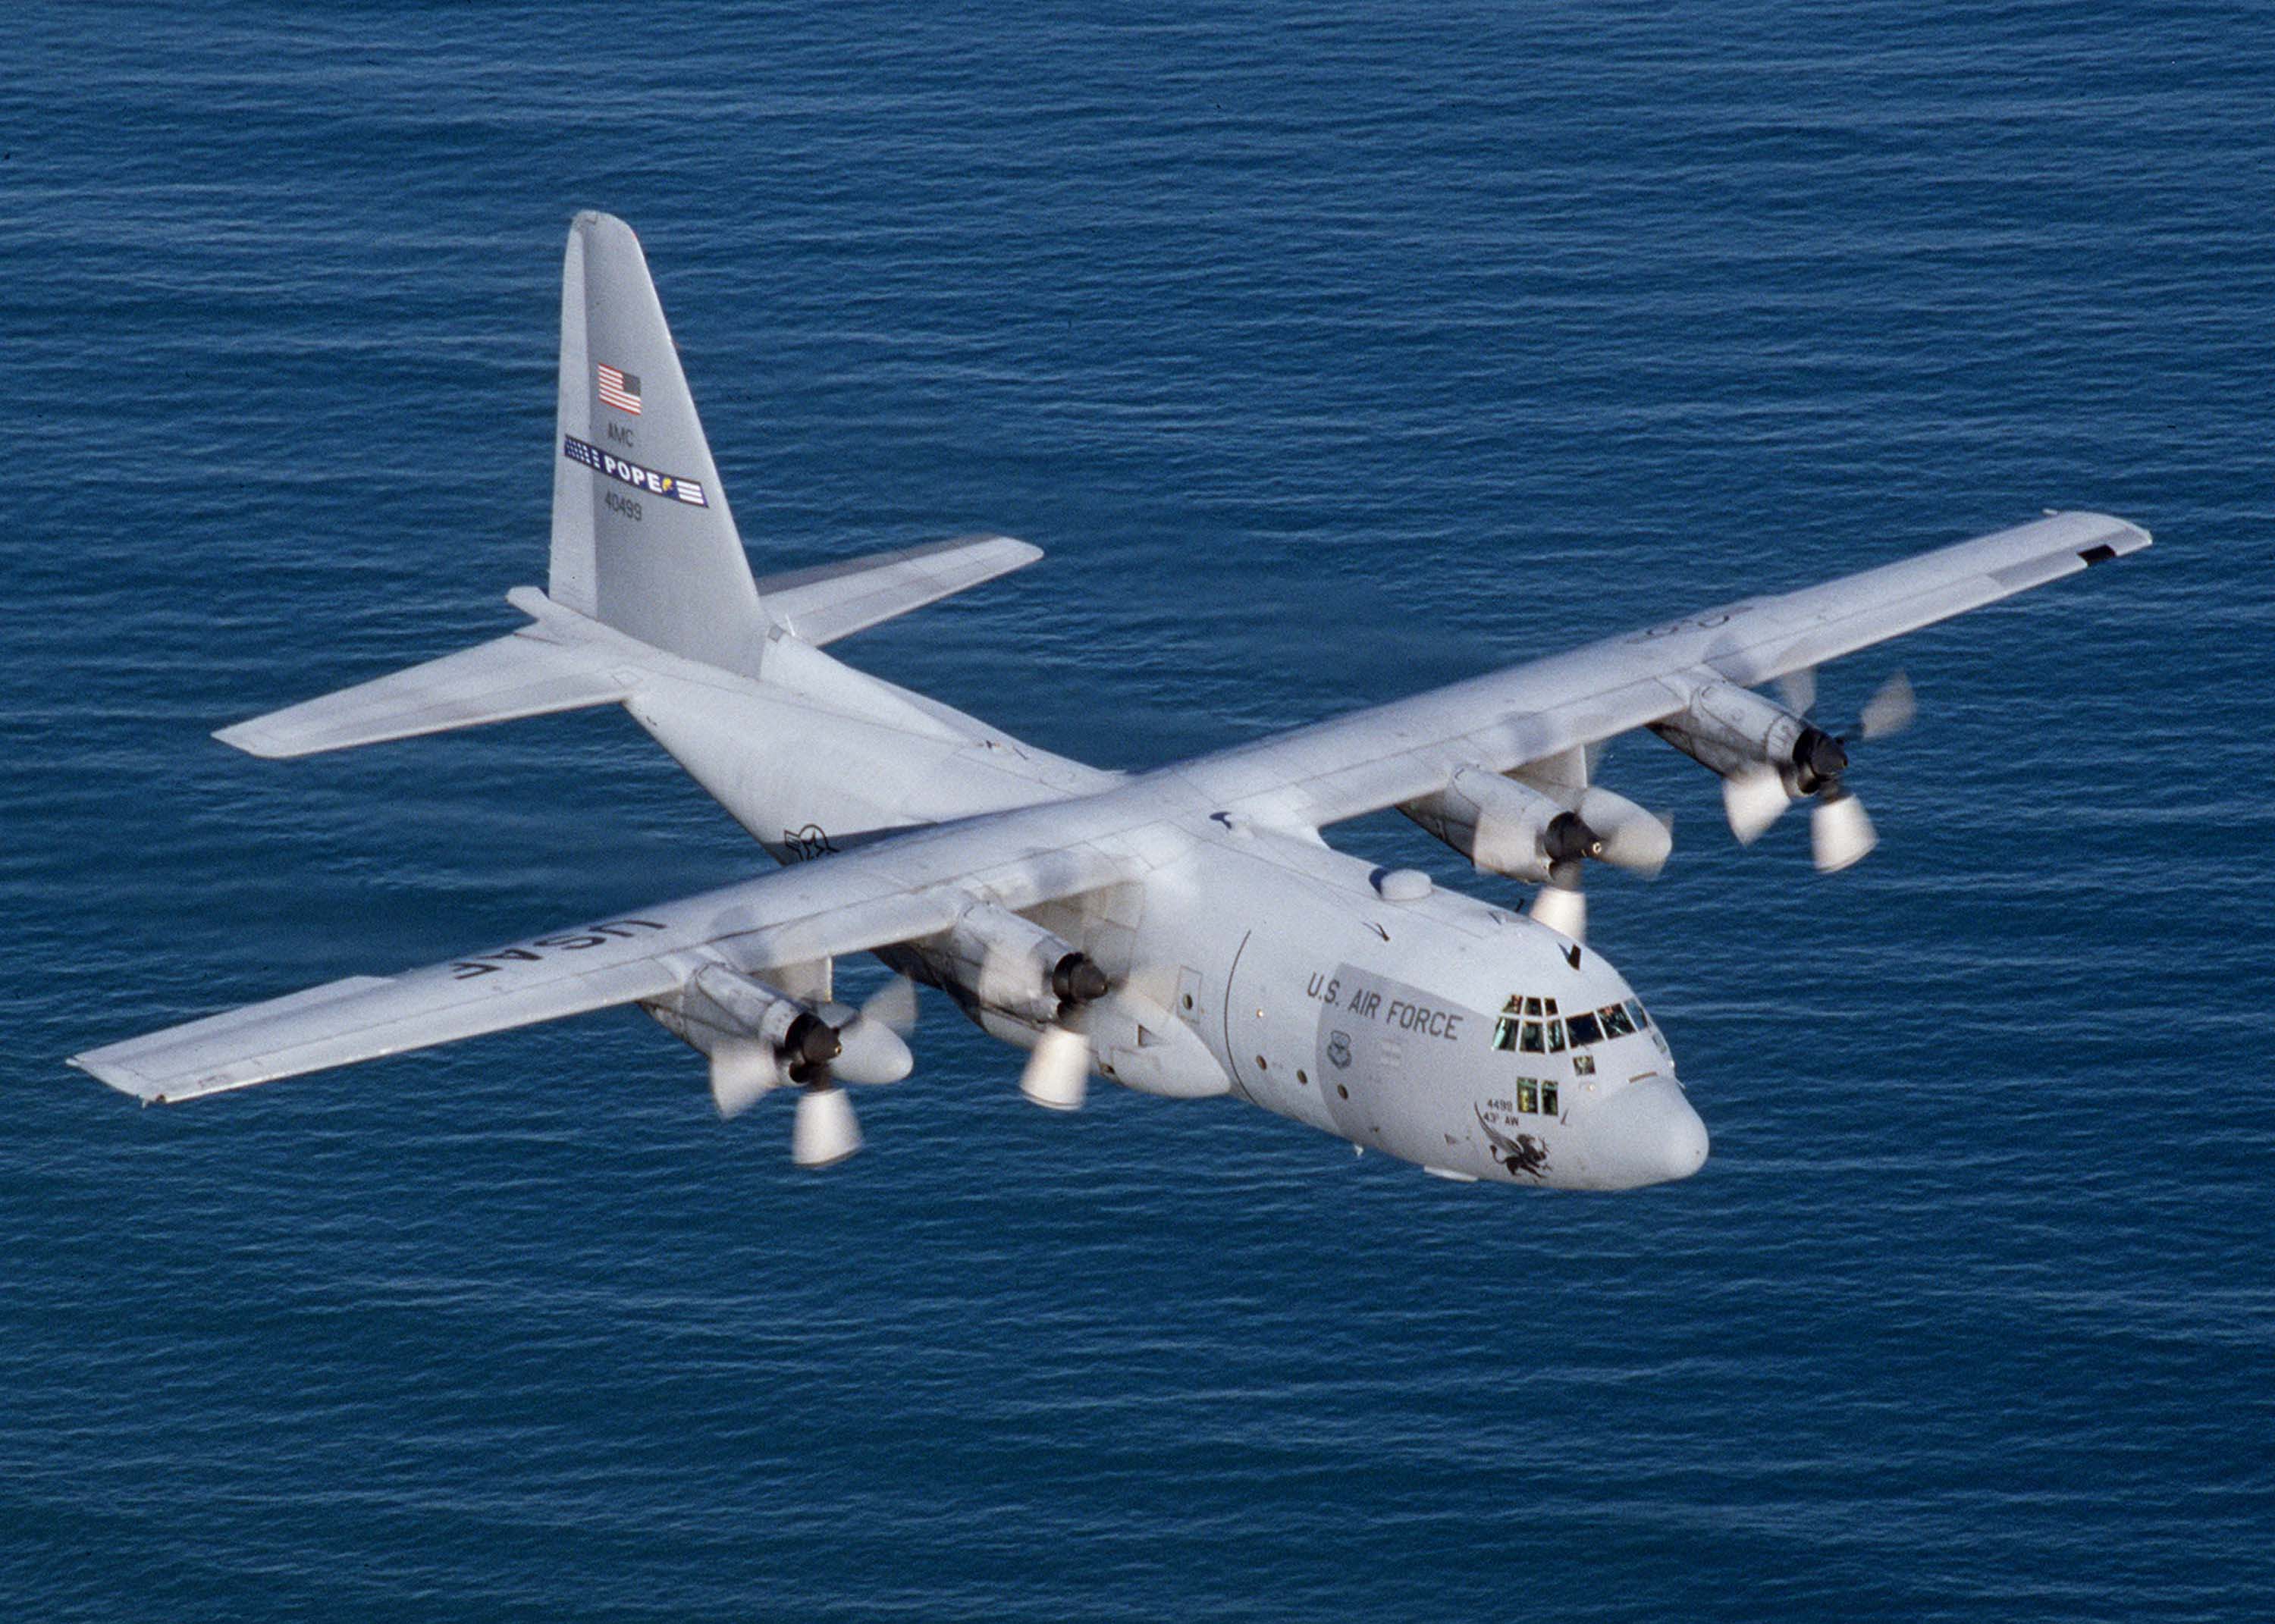 http://upload.wikimedia.org/wikipedia/commons/c/cc/Lockheed_C-130_Hercules.jpg